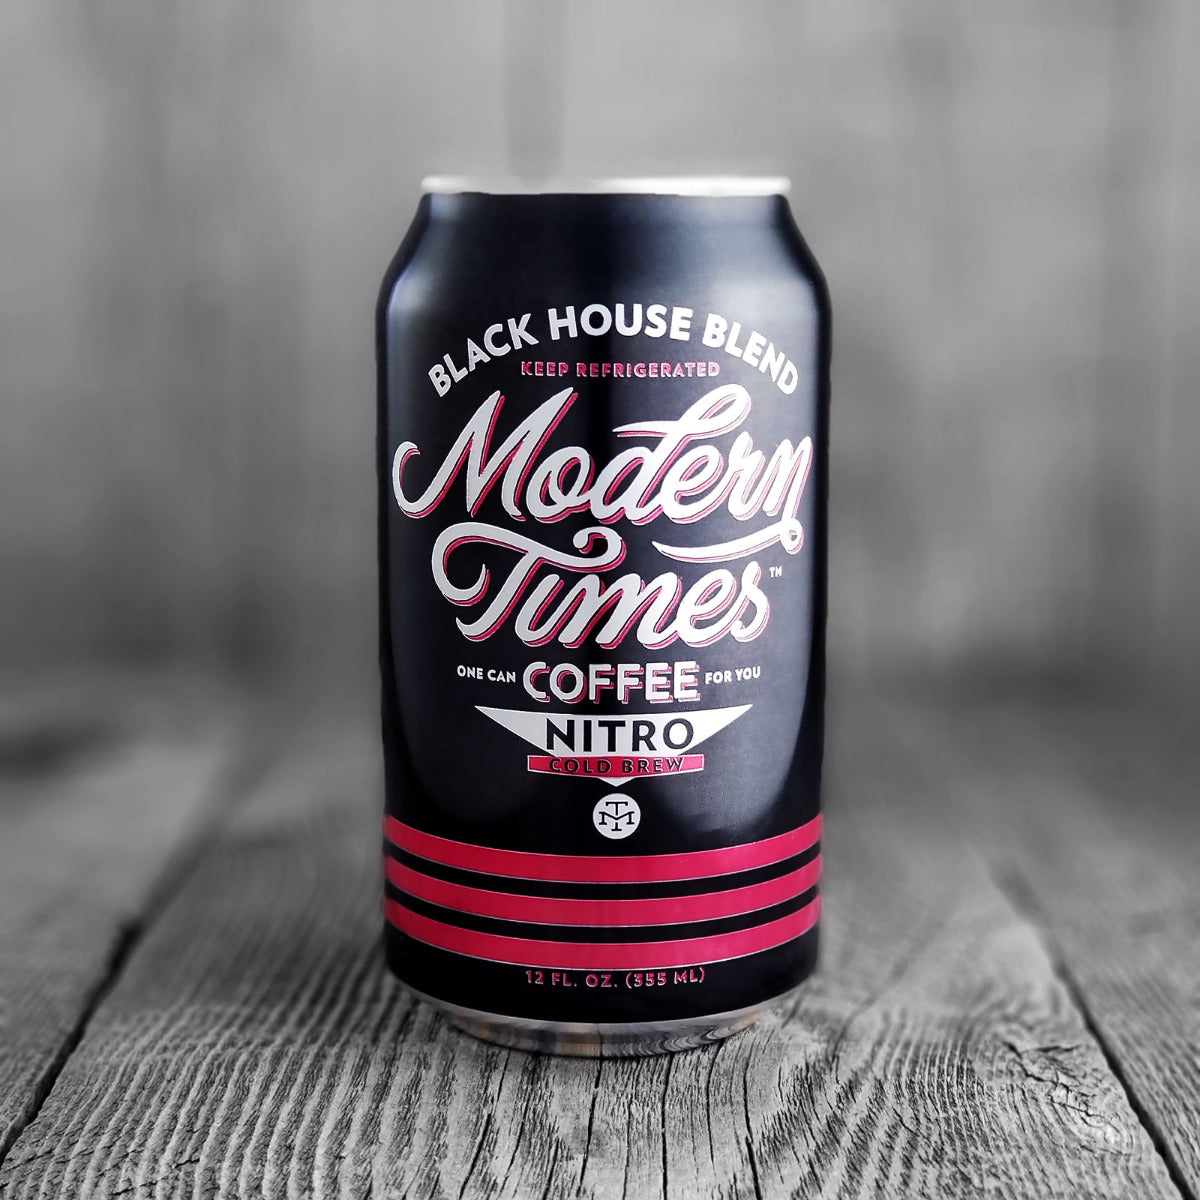 Modern Times Coffee Black House Blend - Nitro -